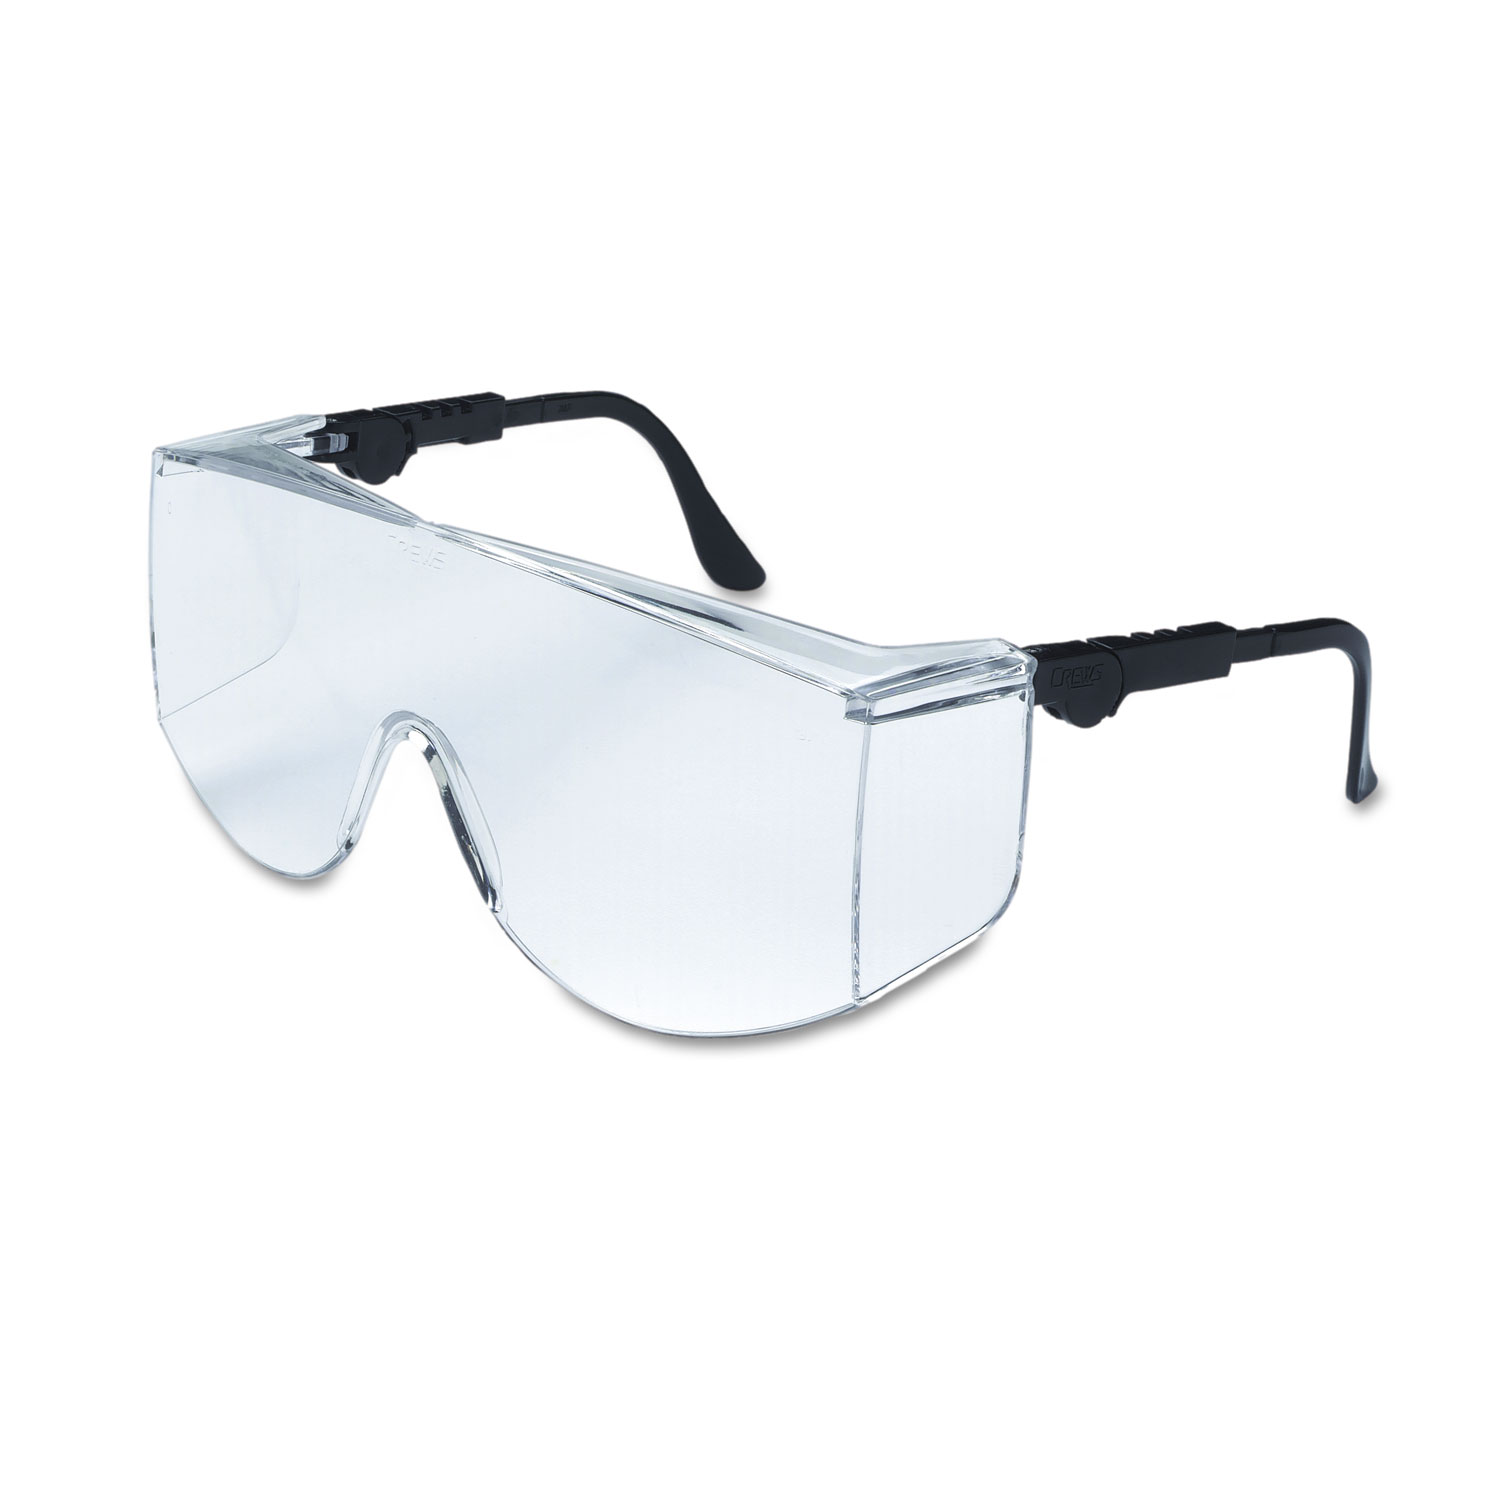  MCR Safety TC110XL Tacoma Wraparound Safety Glasses, Black Frames, Clear Lenses (CRWTC110XL) 